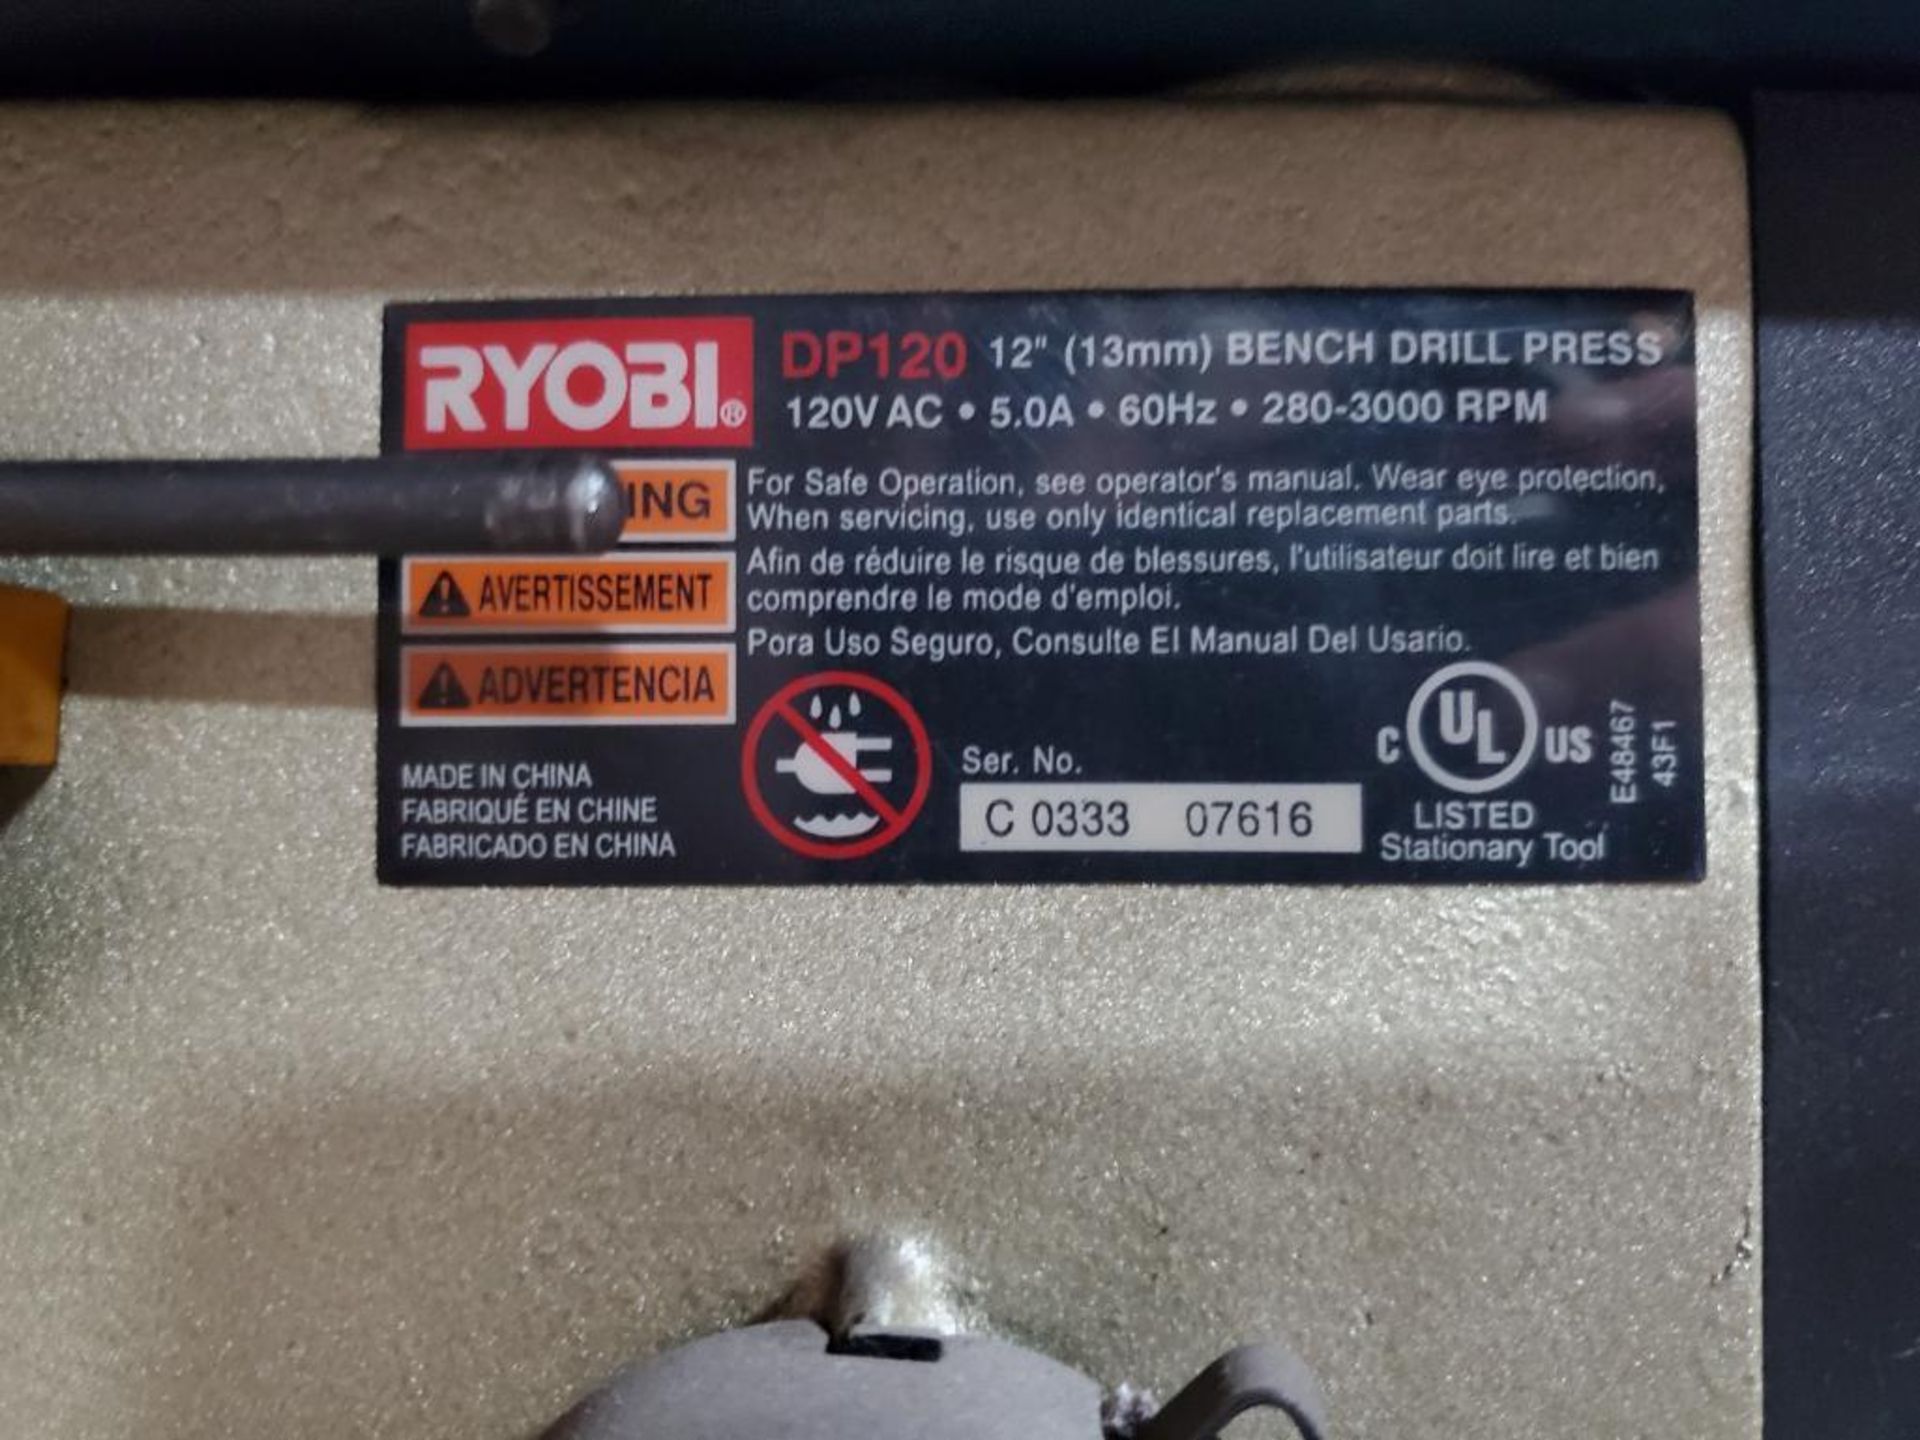 Ryobi 12" Bench Top Drill Press, Model DP120, 280-3,000 Rpm, 10" Dia. Table - Image 6 of 6